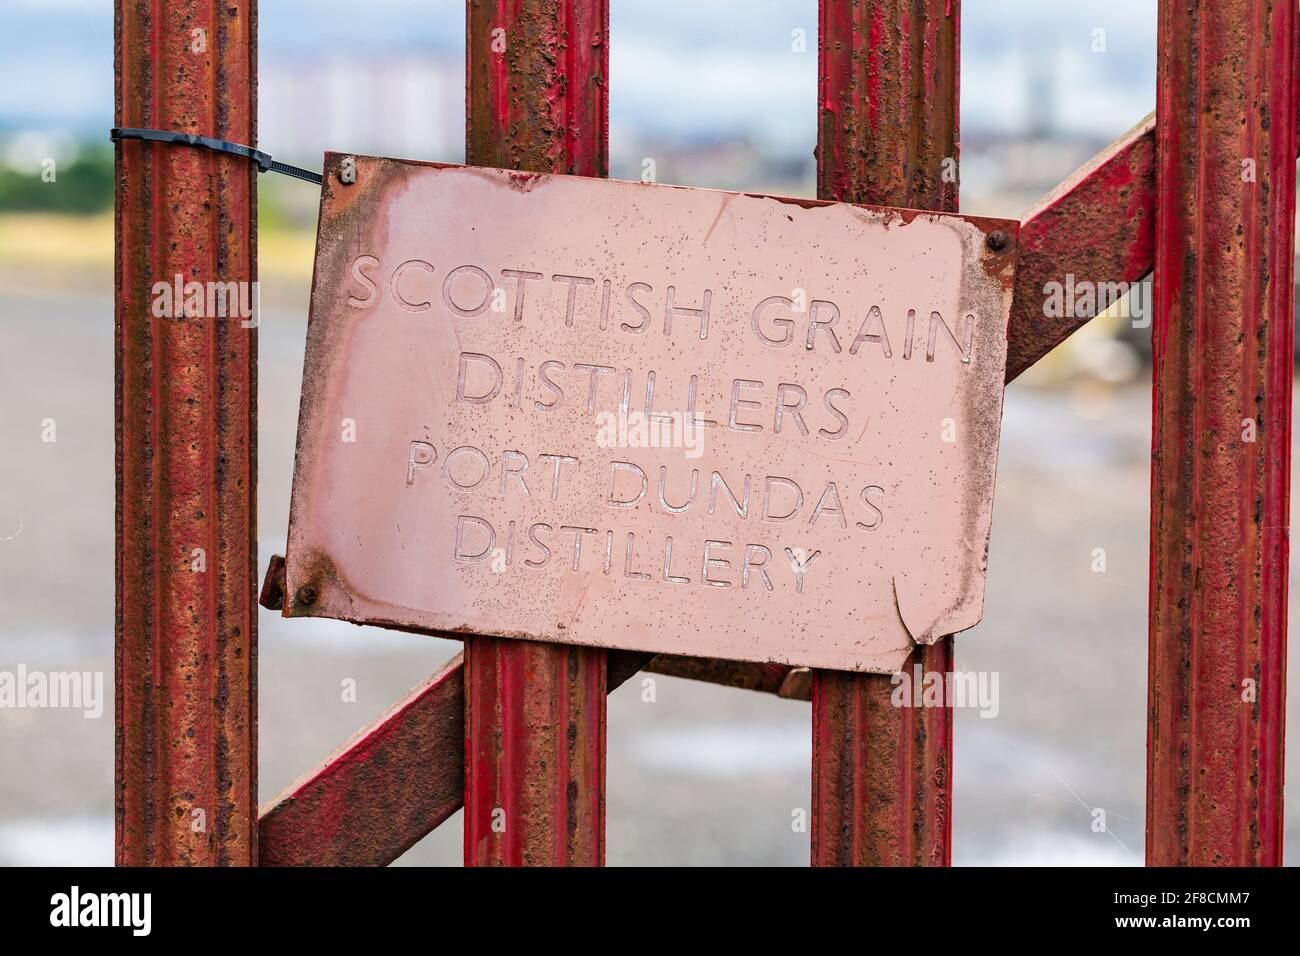 The Port Dundas Distillery is permanently closed. Scottish Grain Distillers faded sign, Port Dundas Distillery, Glasgow, Scotland, UK Stock Photo